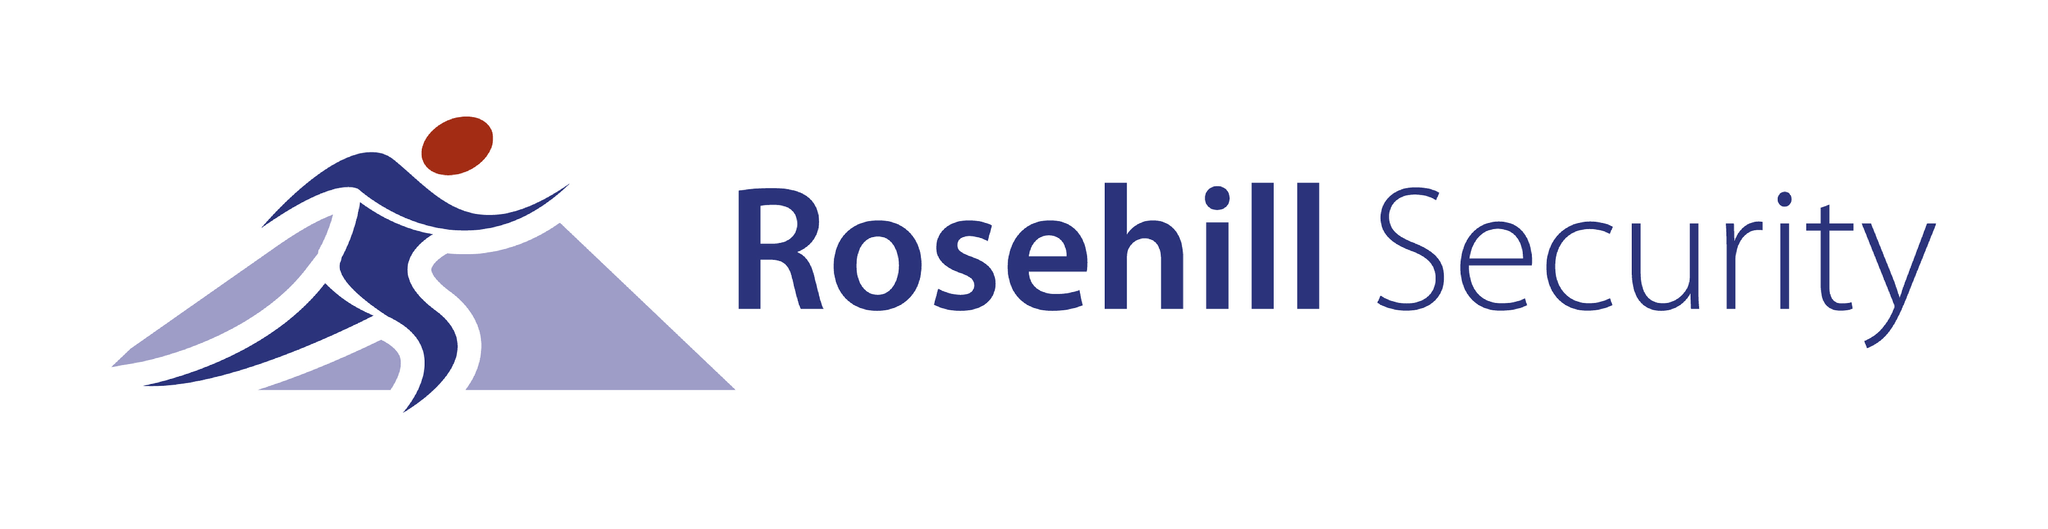 Rosehill Security